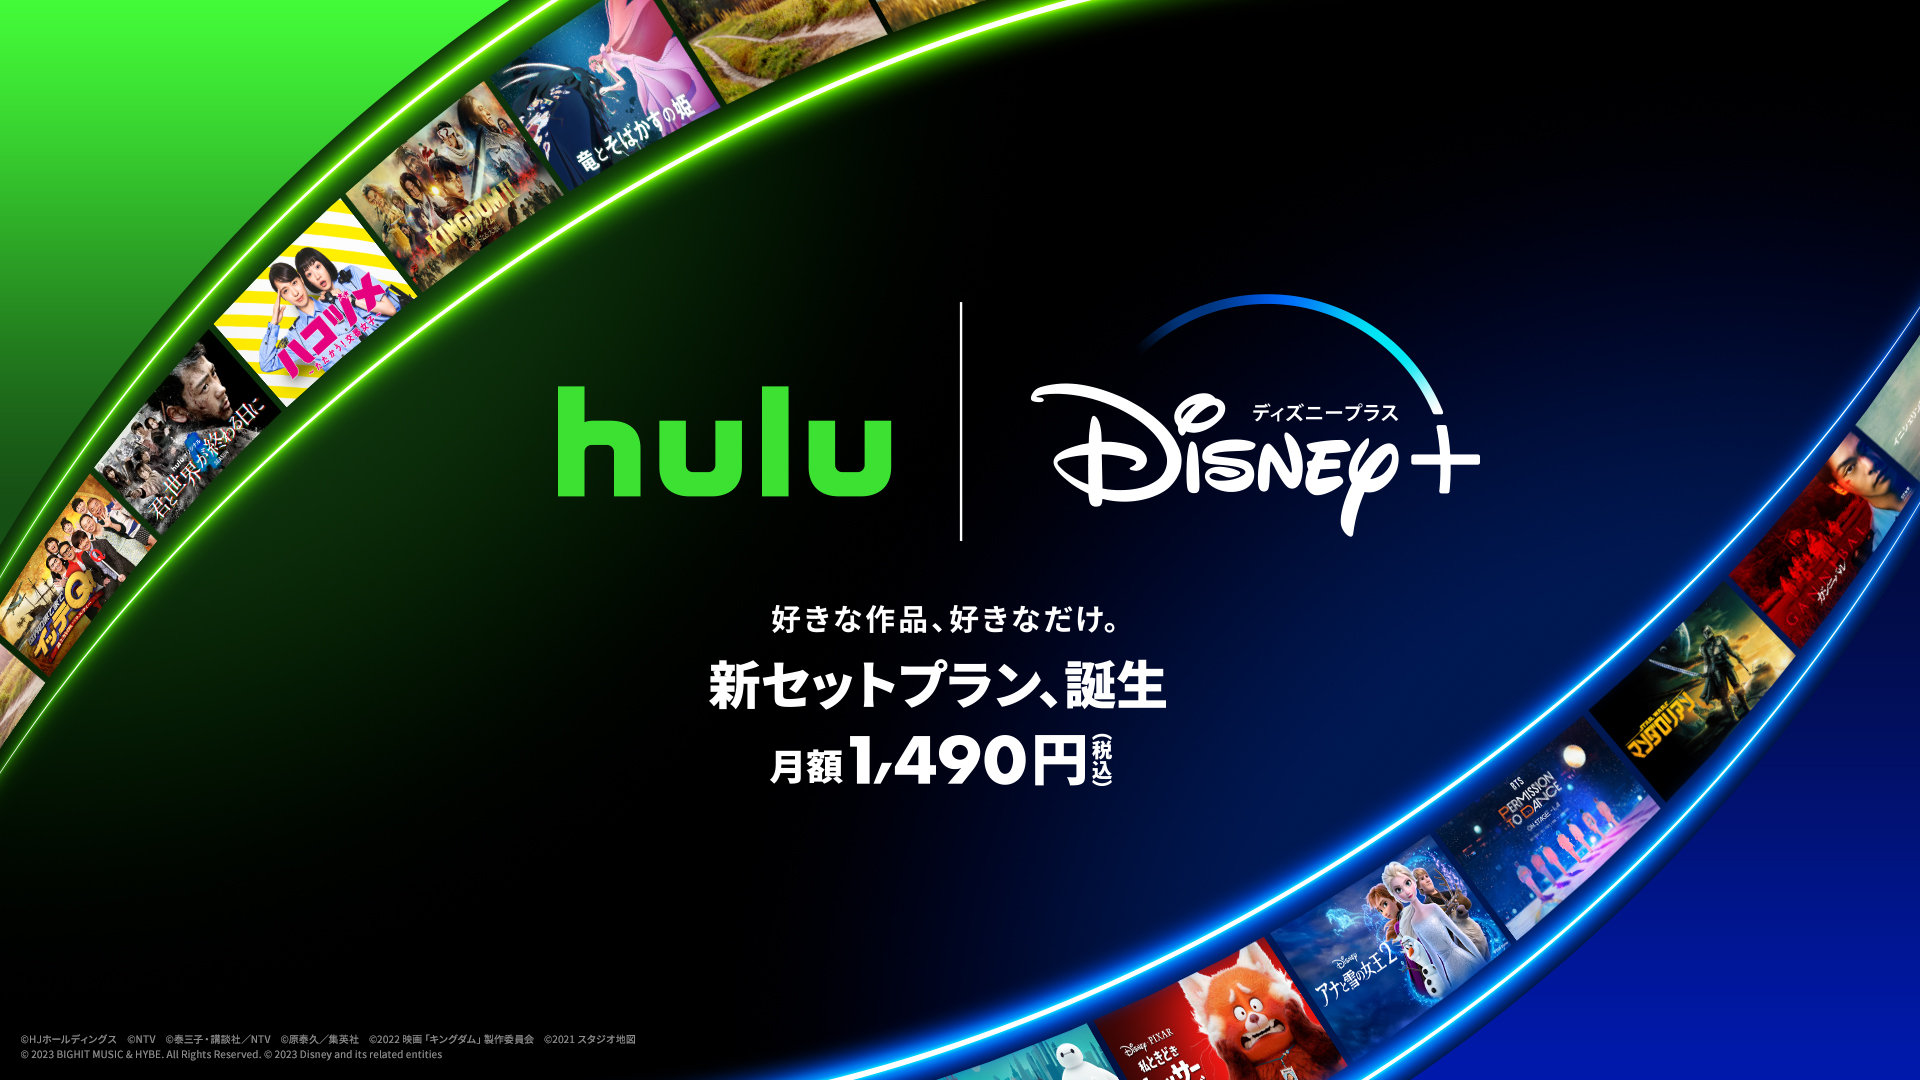 【Hulu】『ディズニープラス』をセットにした料金プランが登場、個々に加入するより毎月500円以上お得